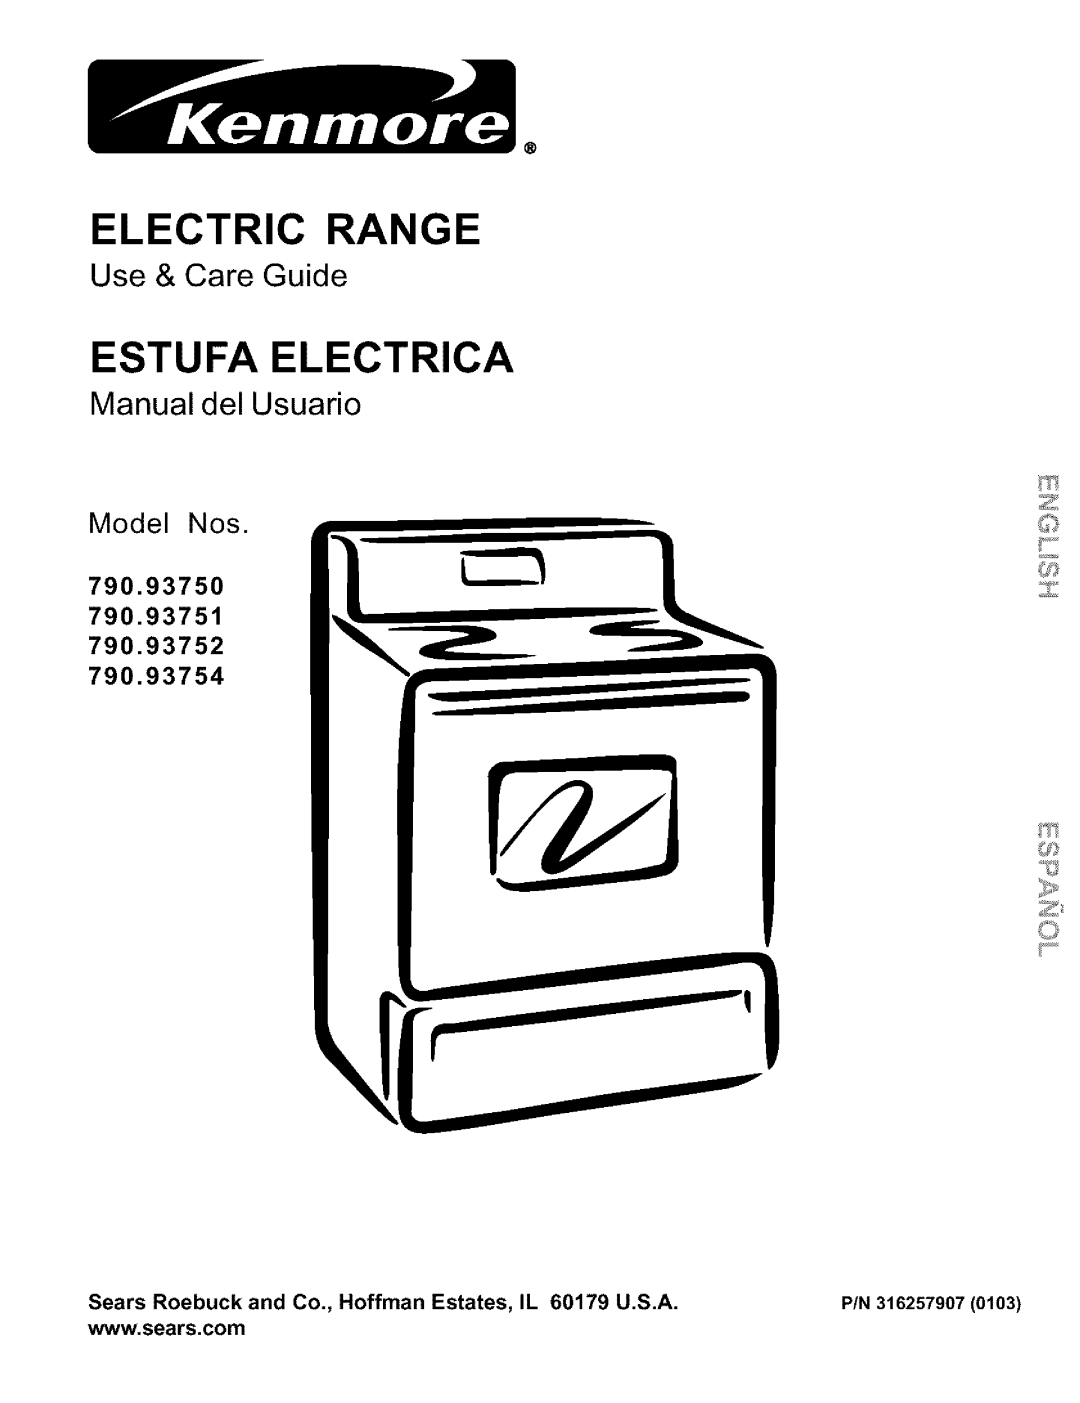 Sears 790.93754 manual Use & Care Guide, Manual del Usuario, Electric Range, Estufa Electrica, Model Nos, 790.93750, Pin 